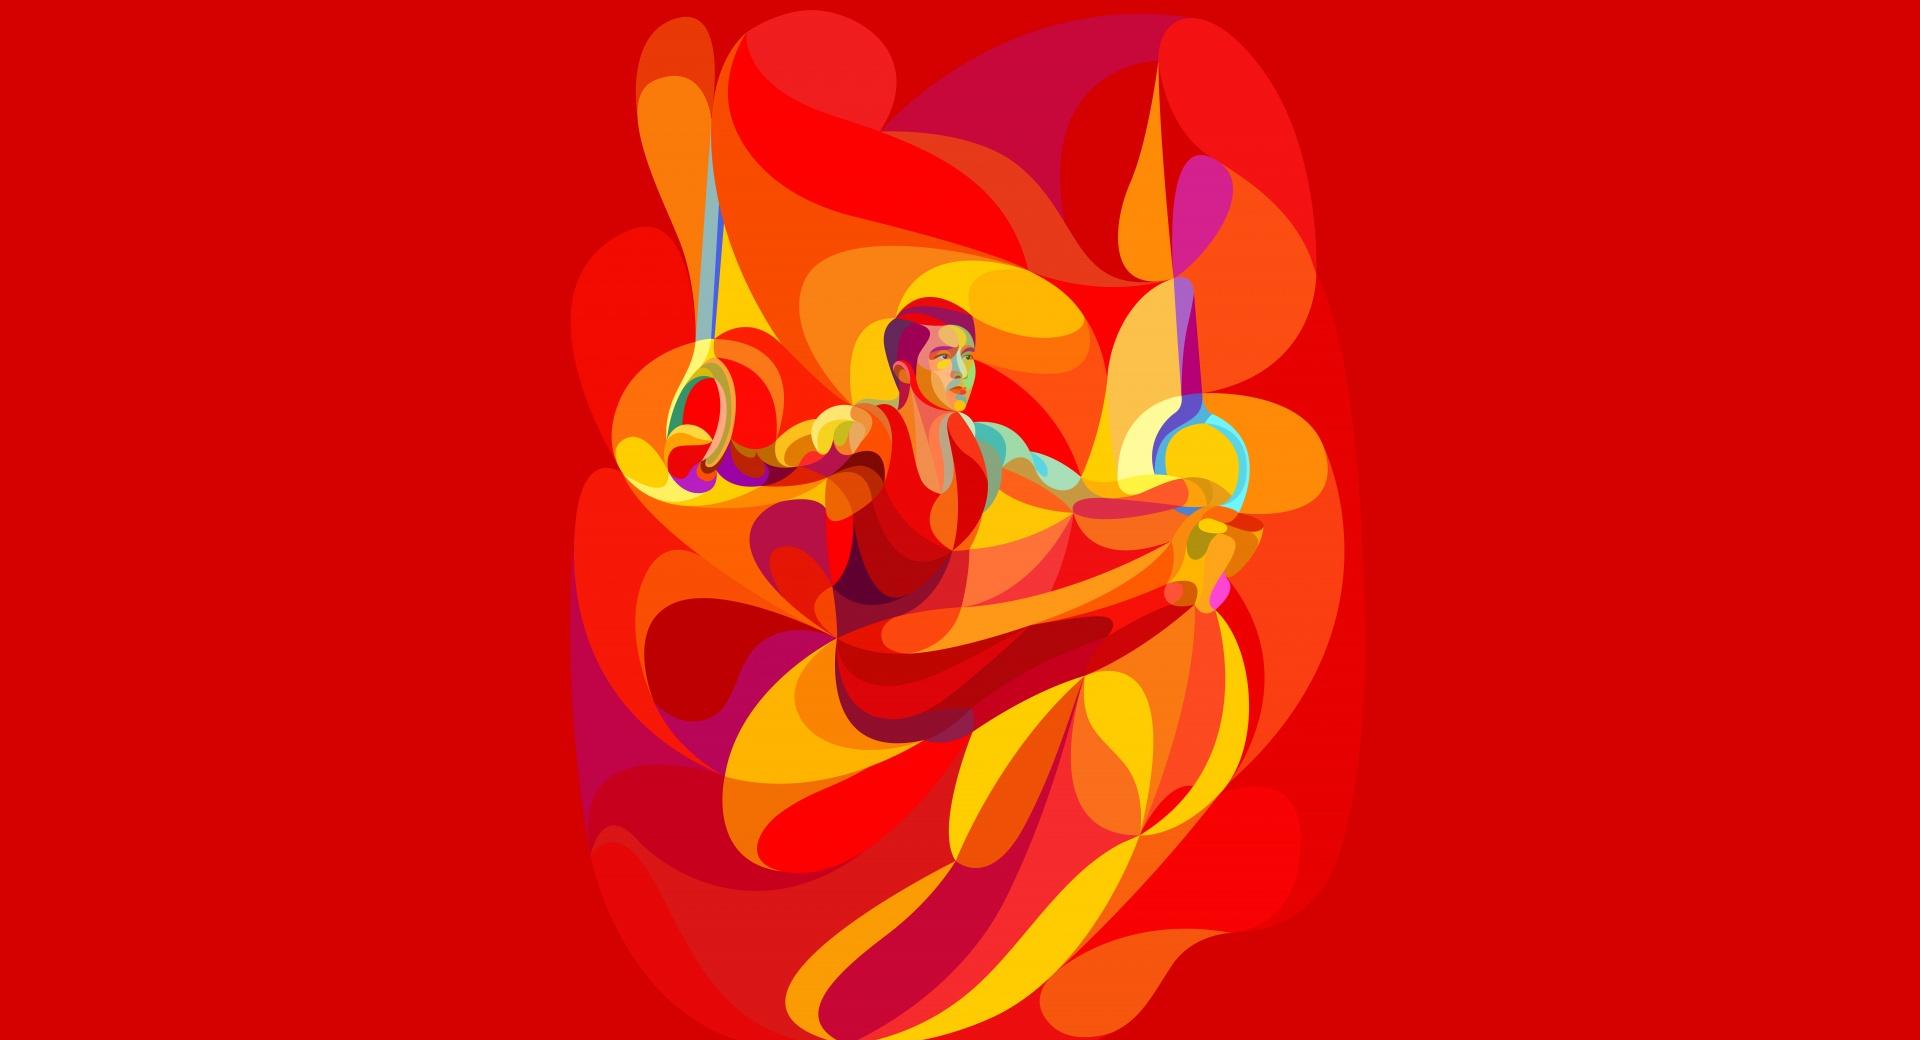 Rio 2016 Olympics Gymnastics at 2048 x 2048 iPad size wallpapers HD quality